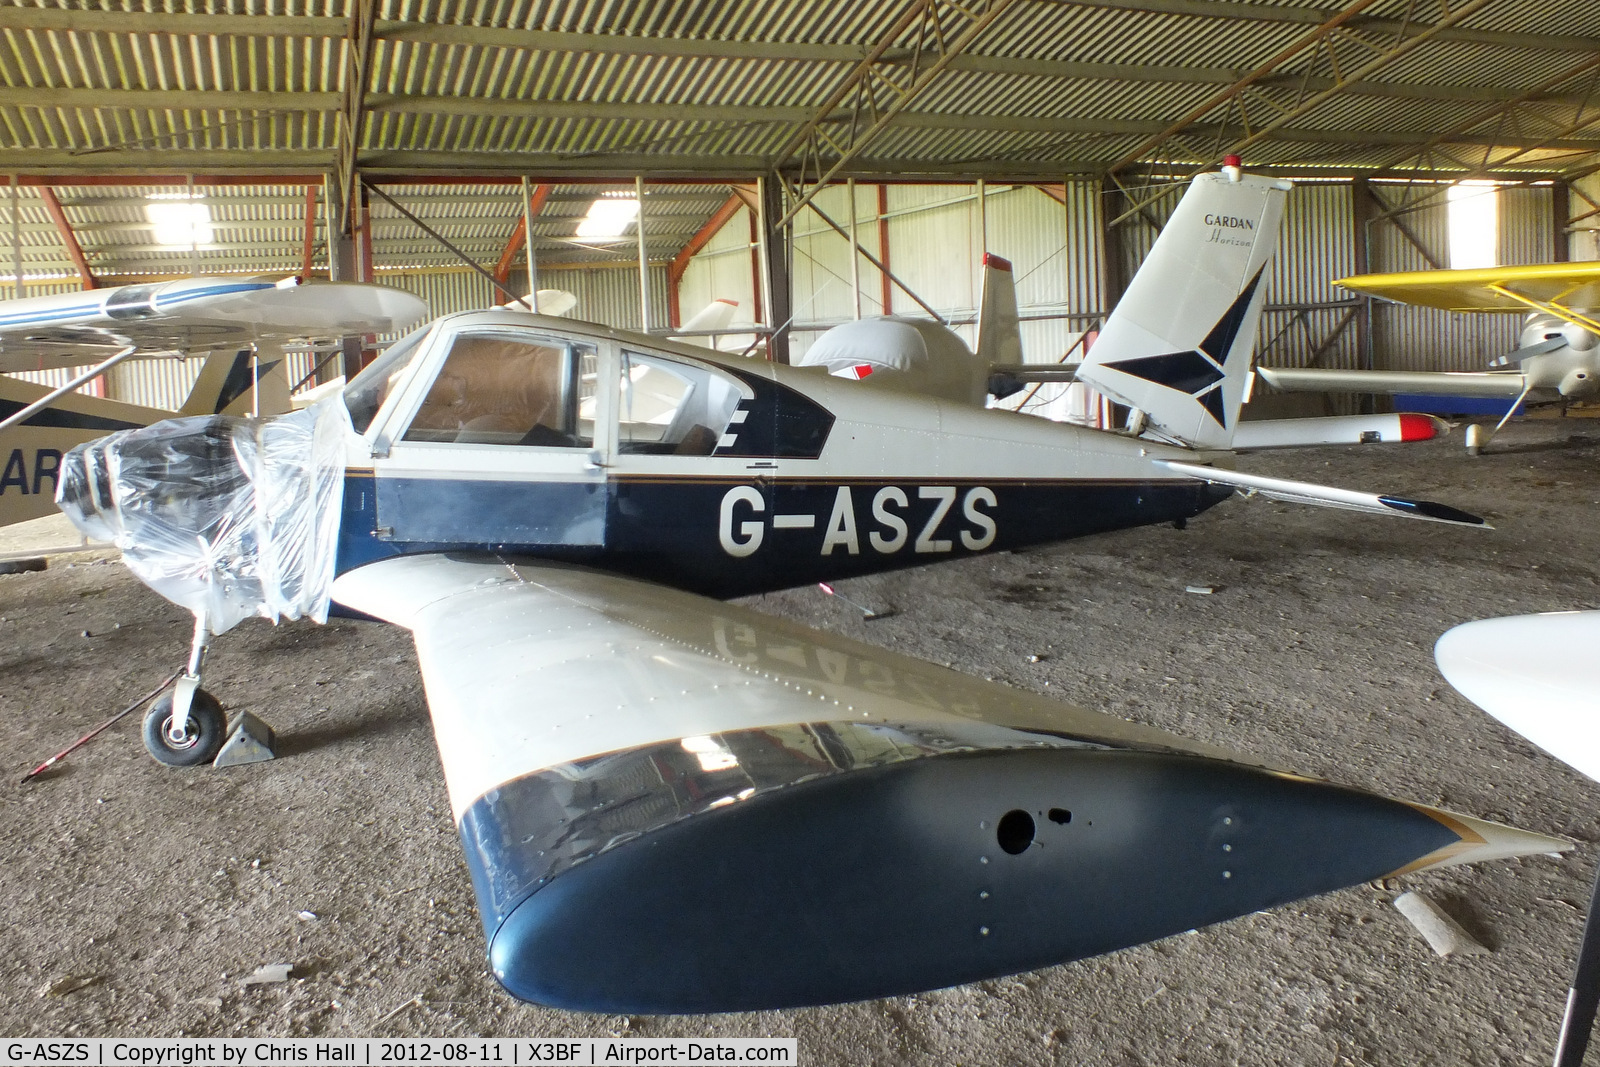 G-ASZS, 1965 Gardan GY-80-160 Horizon C/N 70, at Bidford Airfield